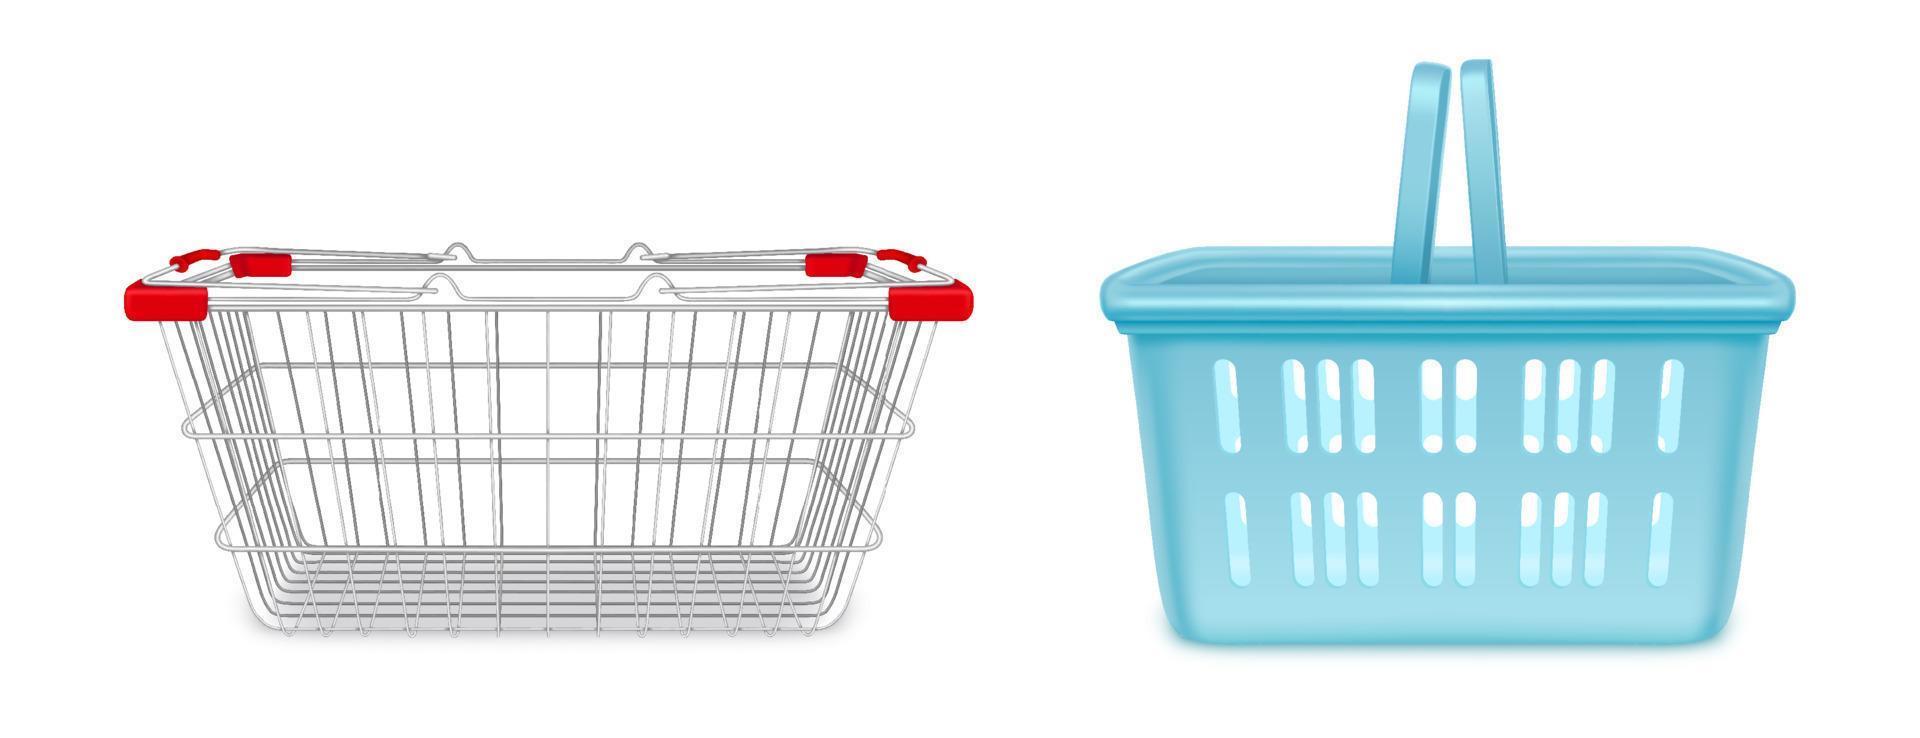 Shopping baskets, supermarket metal, plastic carts vector